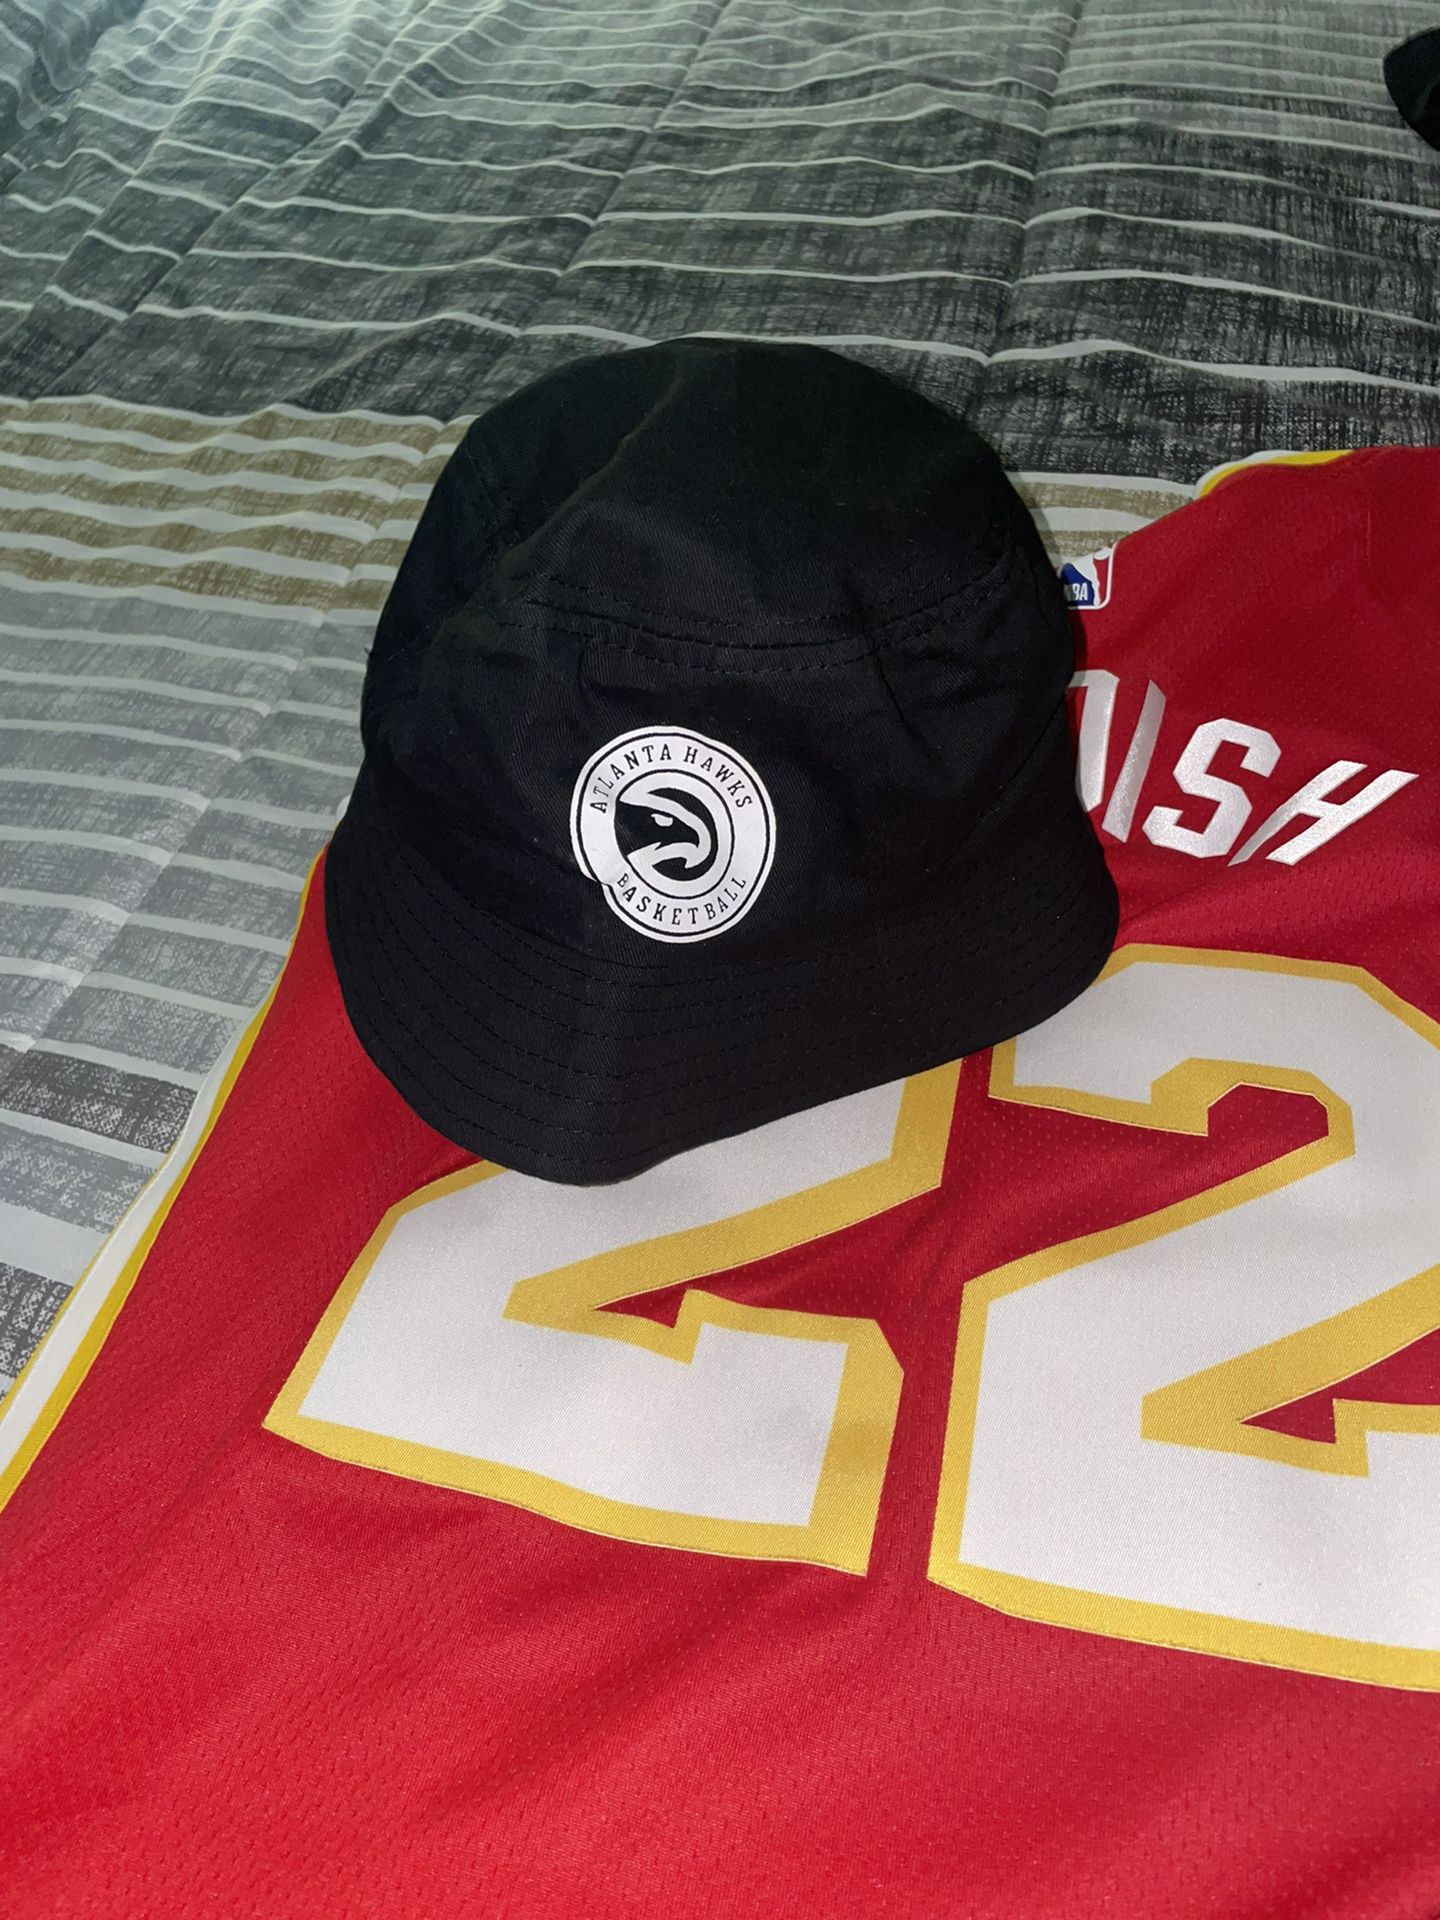 Cam Reddish Hawks Jersey With Bucket Hat for Sale in Brandon, FL - OfferUp